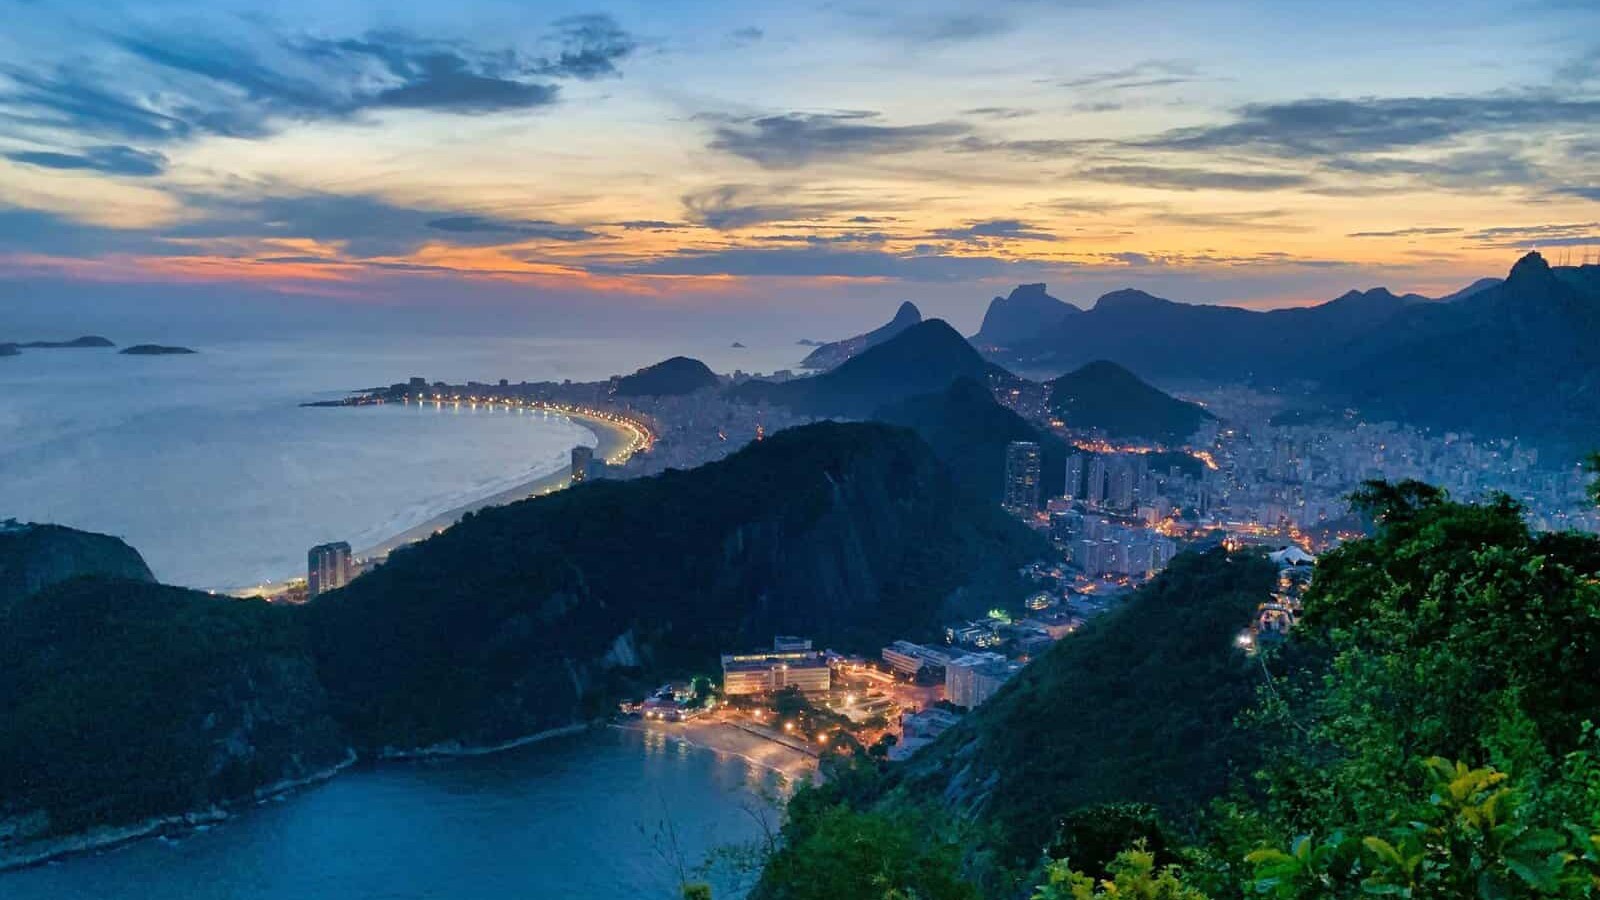 Awesome night shot of the Morro da Urca in Brazil's Rio de Janeiro